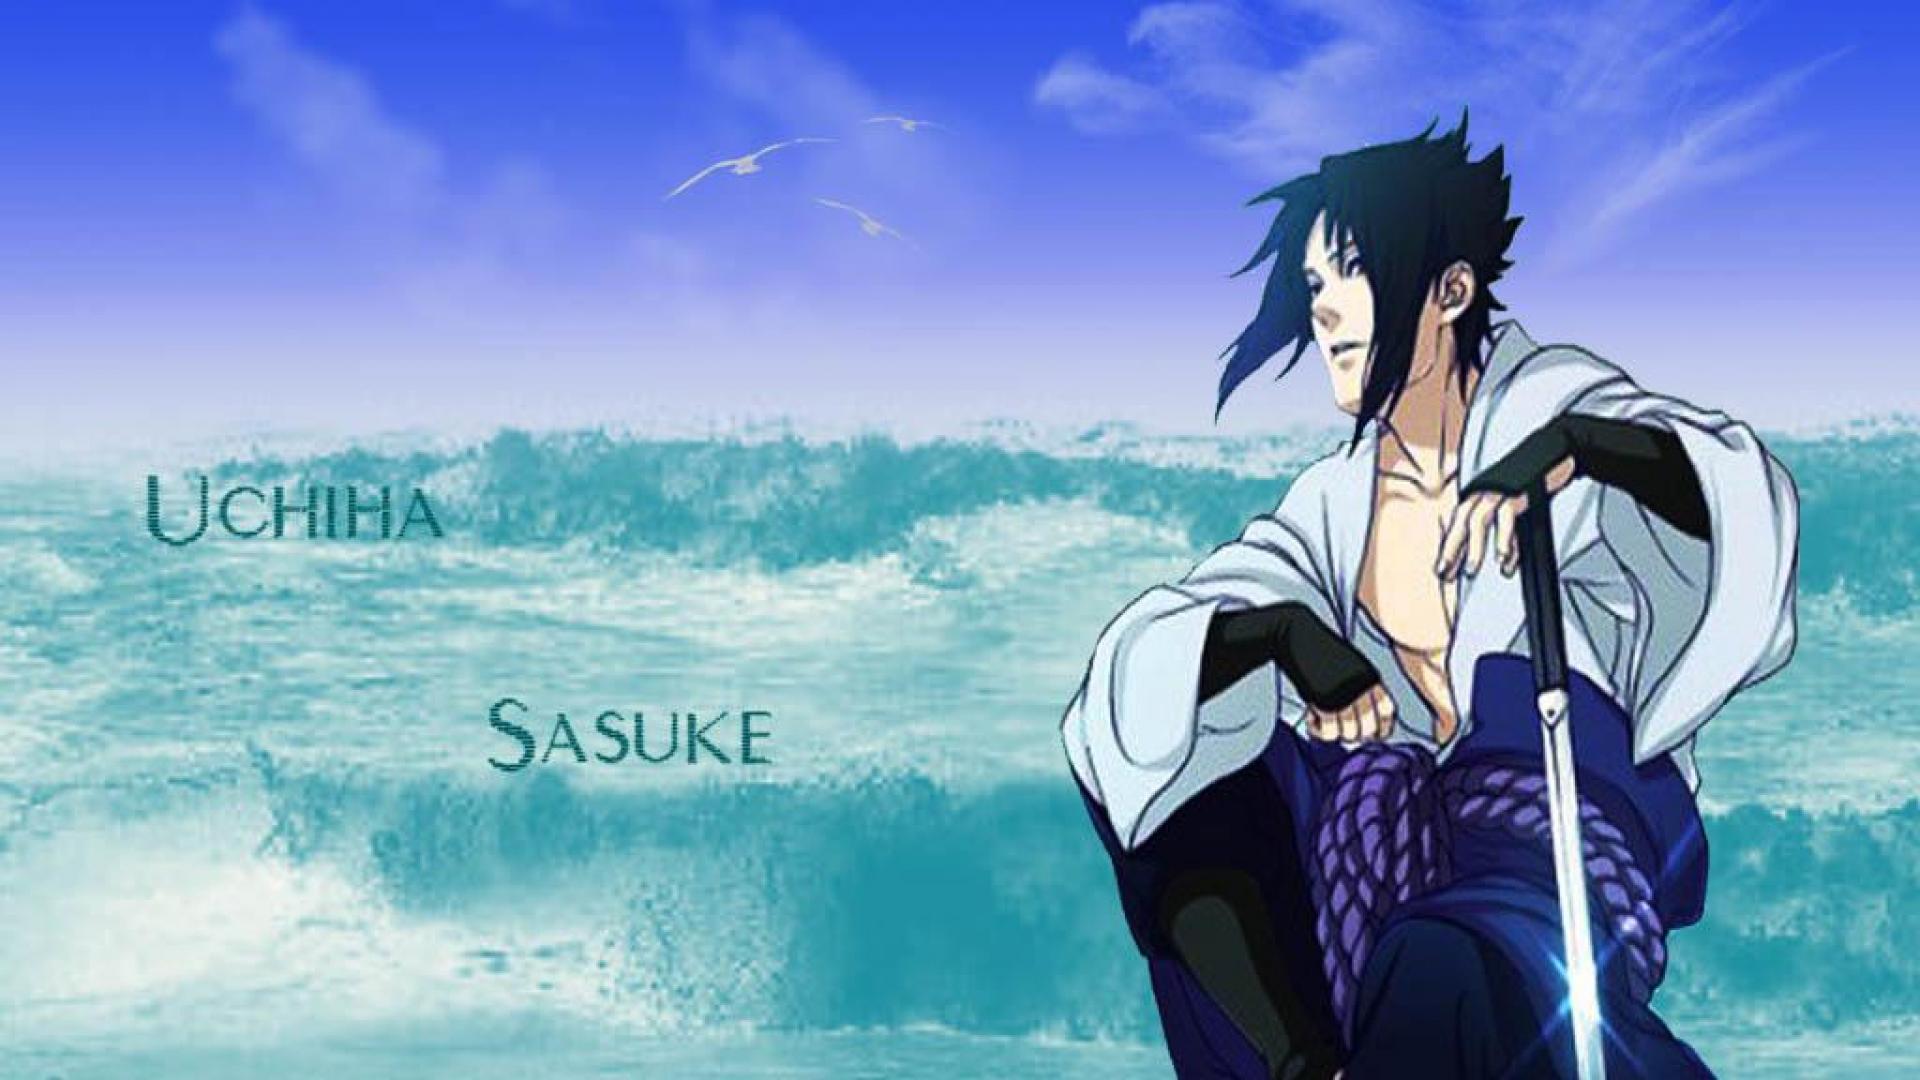 BFU:43 Uchiha Wallpaper, High Resolution Awesome Sasuke